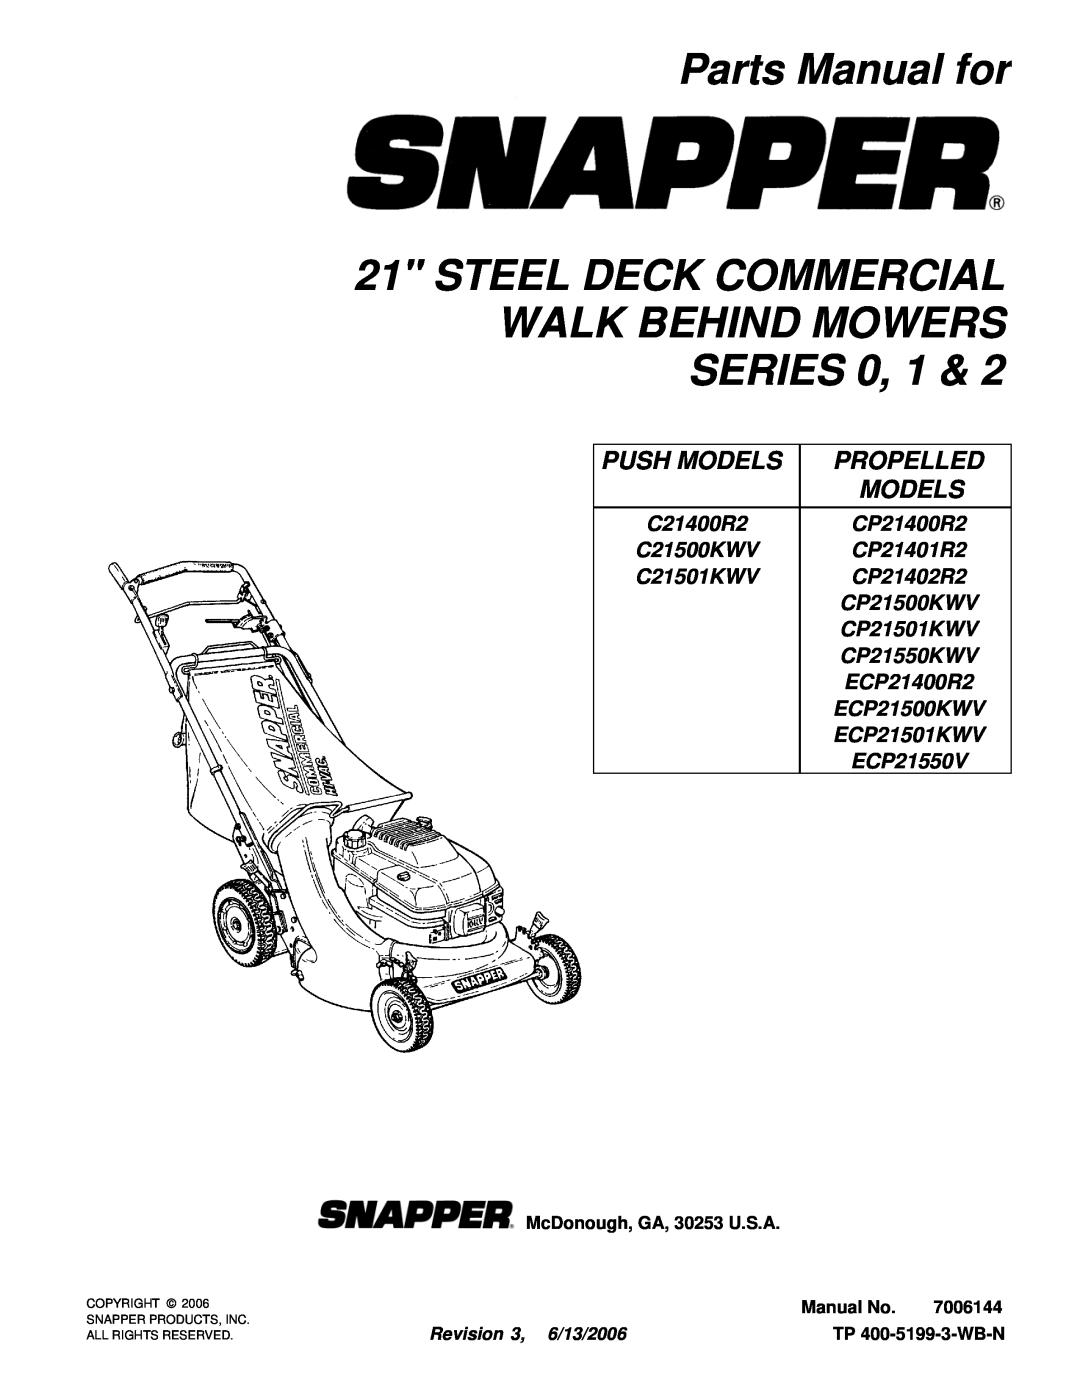 Snapper manual Parts Manual for, STEEL DECK COMMERCIAL WALK BEHIND MOWERS SERIES 0, 1, Push Models, Propelled Models 